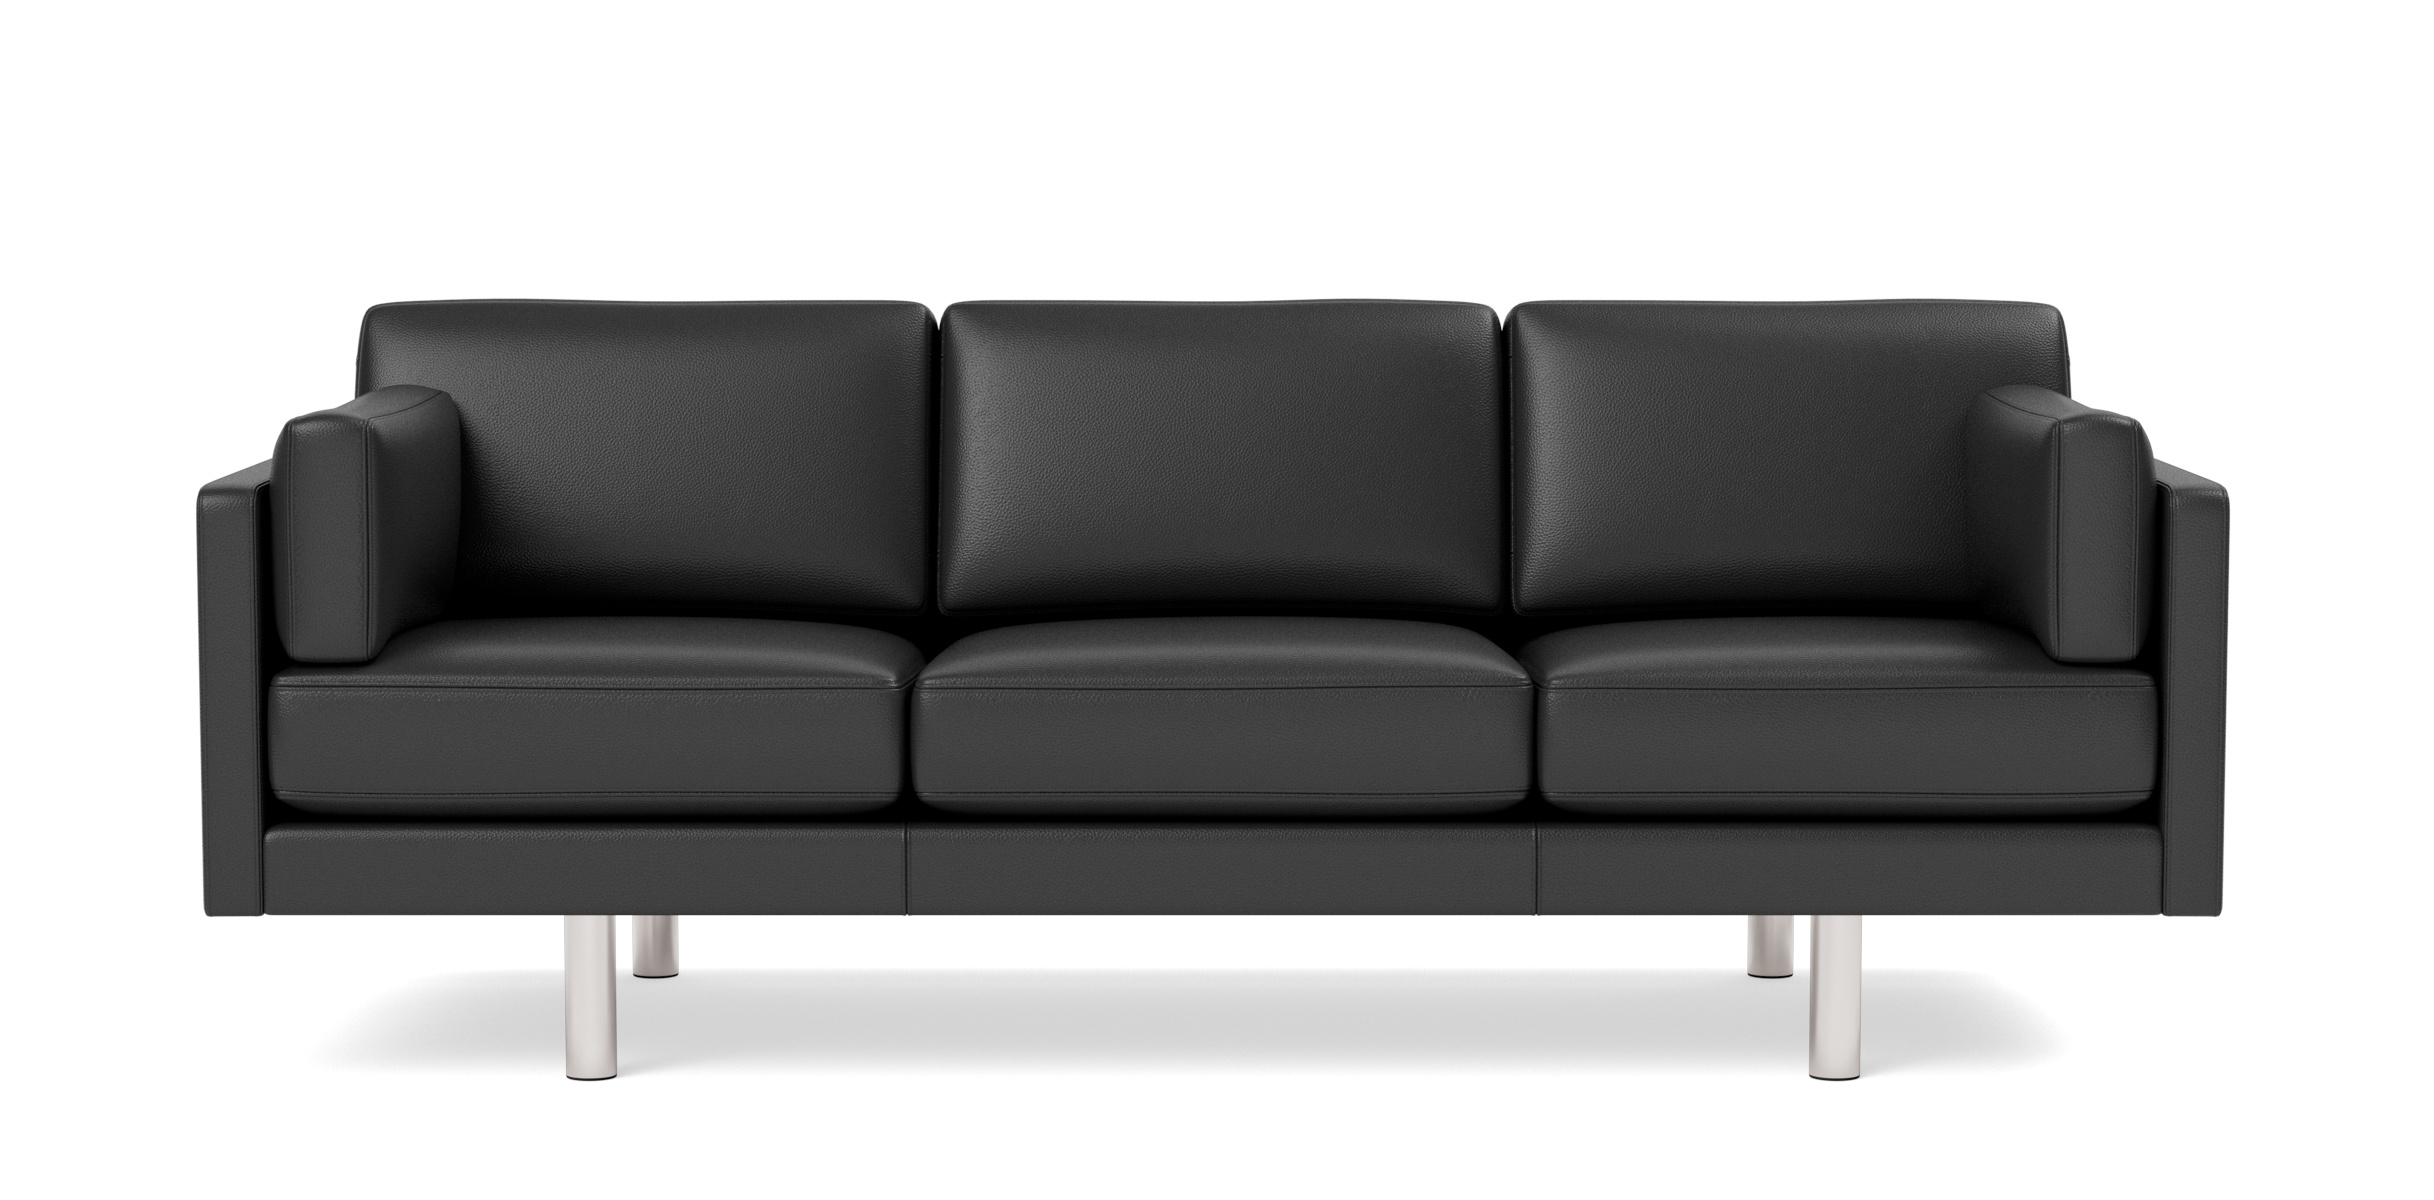 EJ220 Sofa 3-Sitzer, eiche geseift / erik, 9998 broken grey